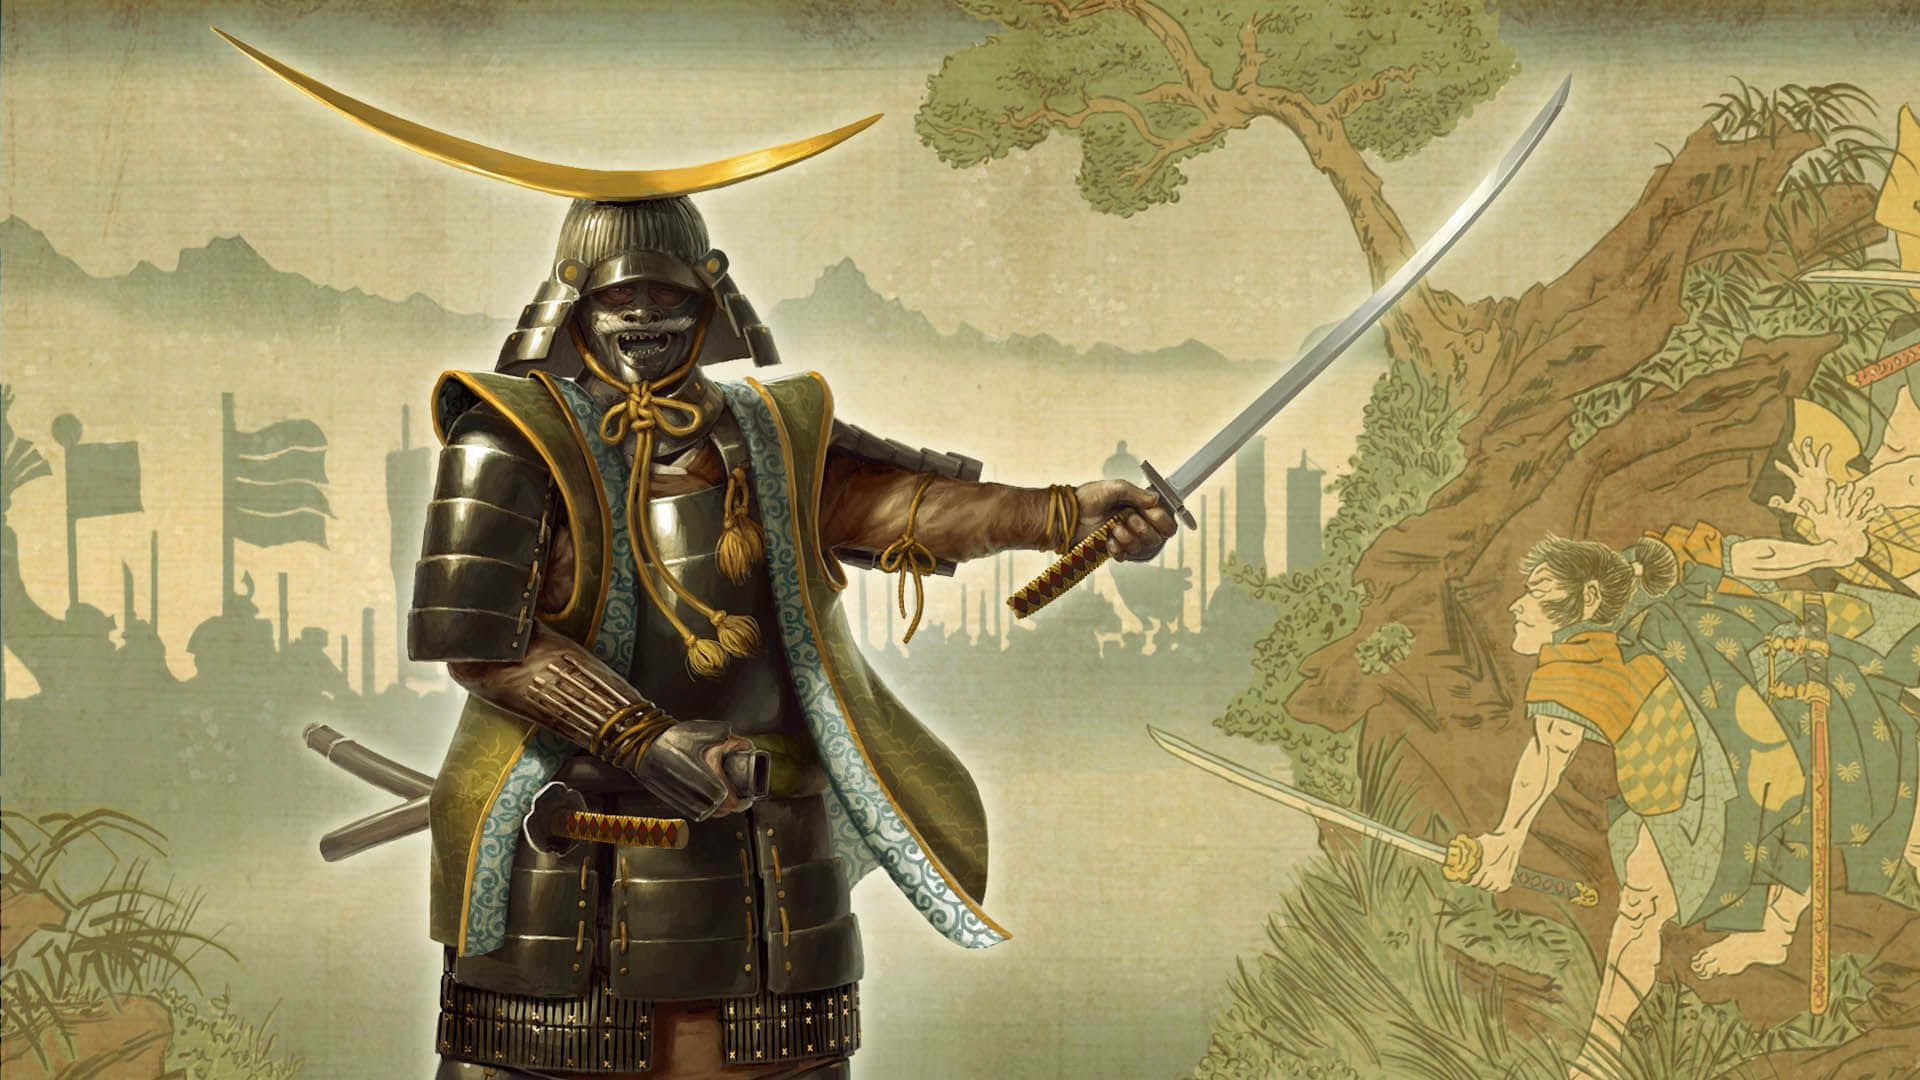 Ancient Shirasay and fearsome Samurai armor combine to create a realistic landscape in the Total War Shogun 2 game.